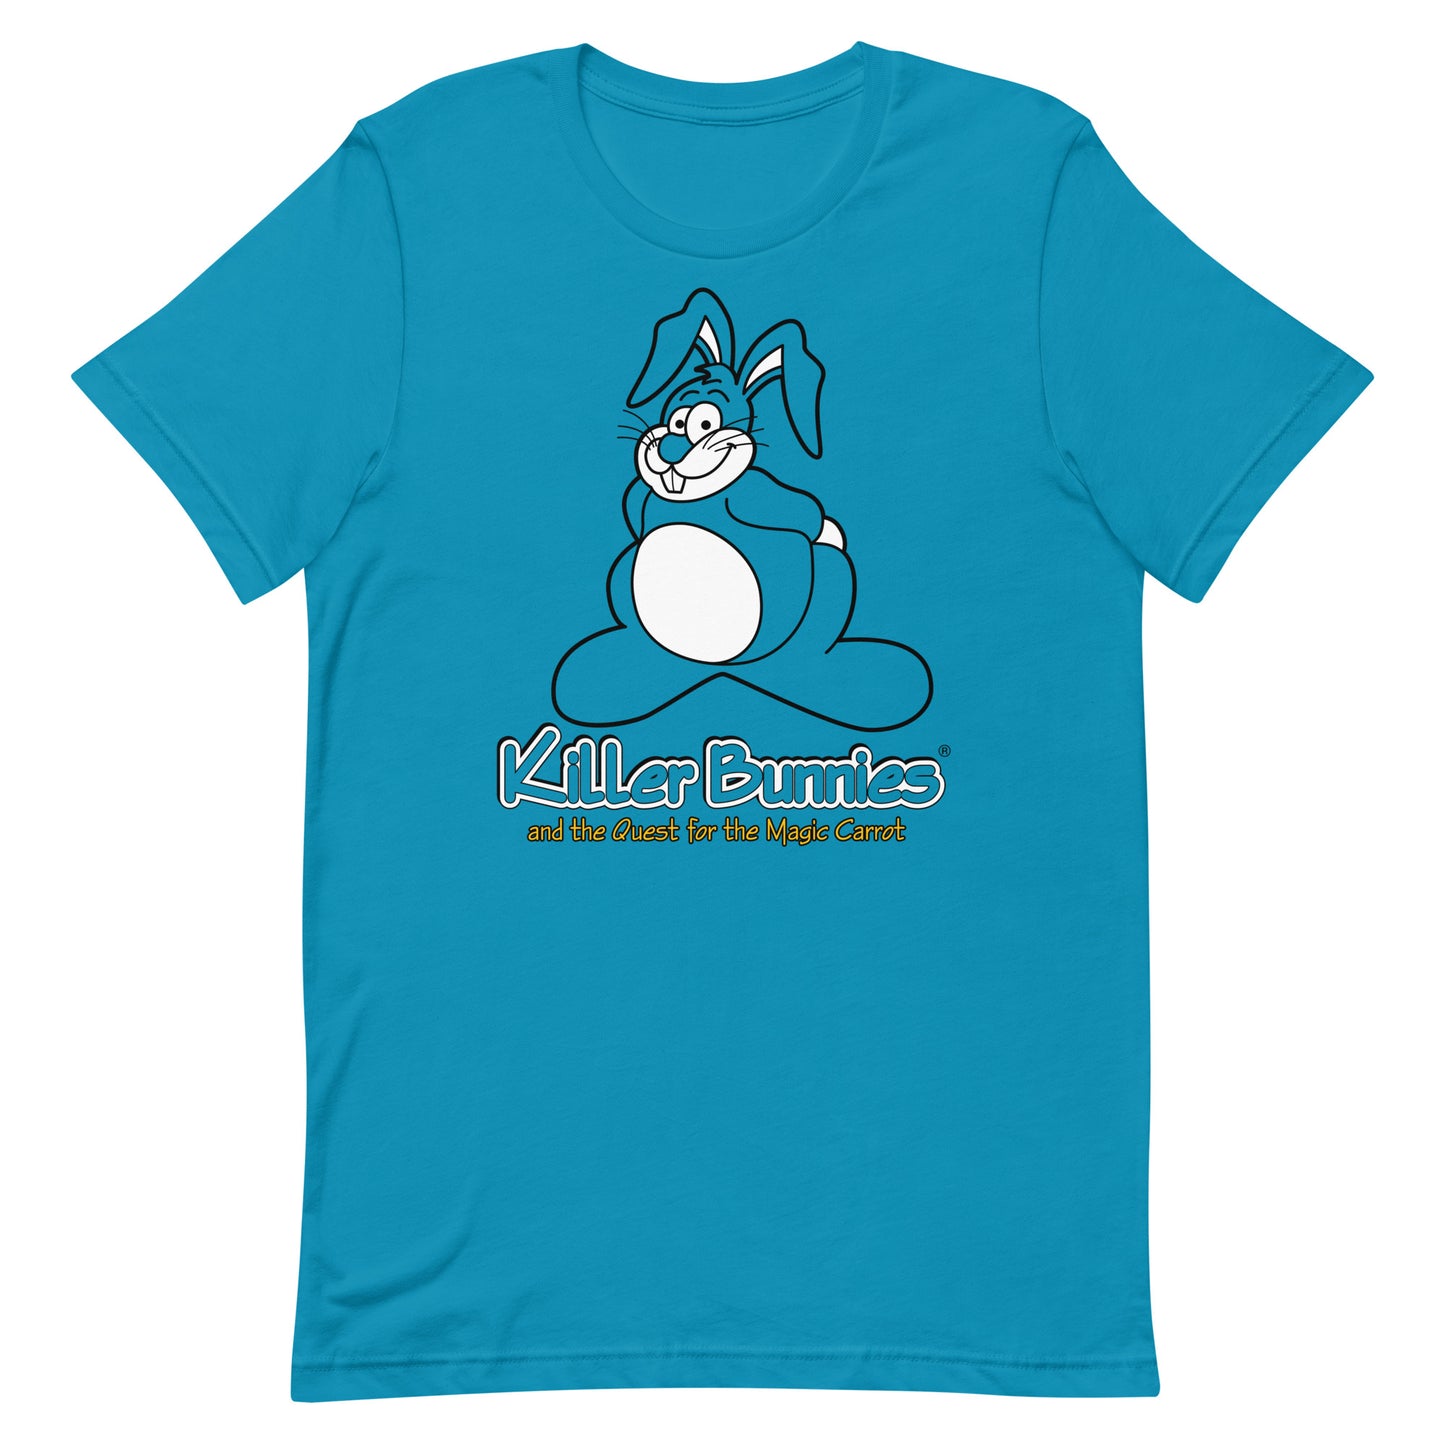 Congenial Bunny Unisex T-Shirt - Aqua